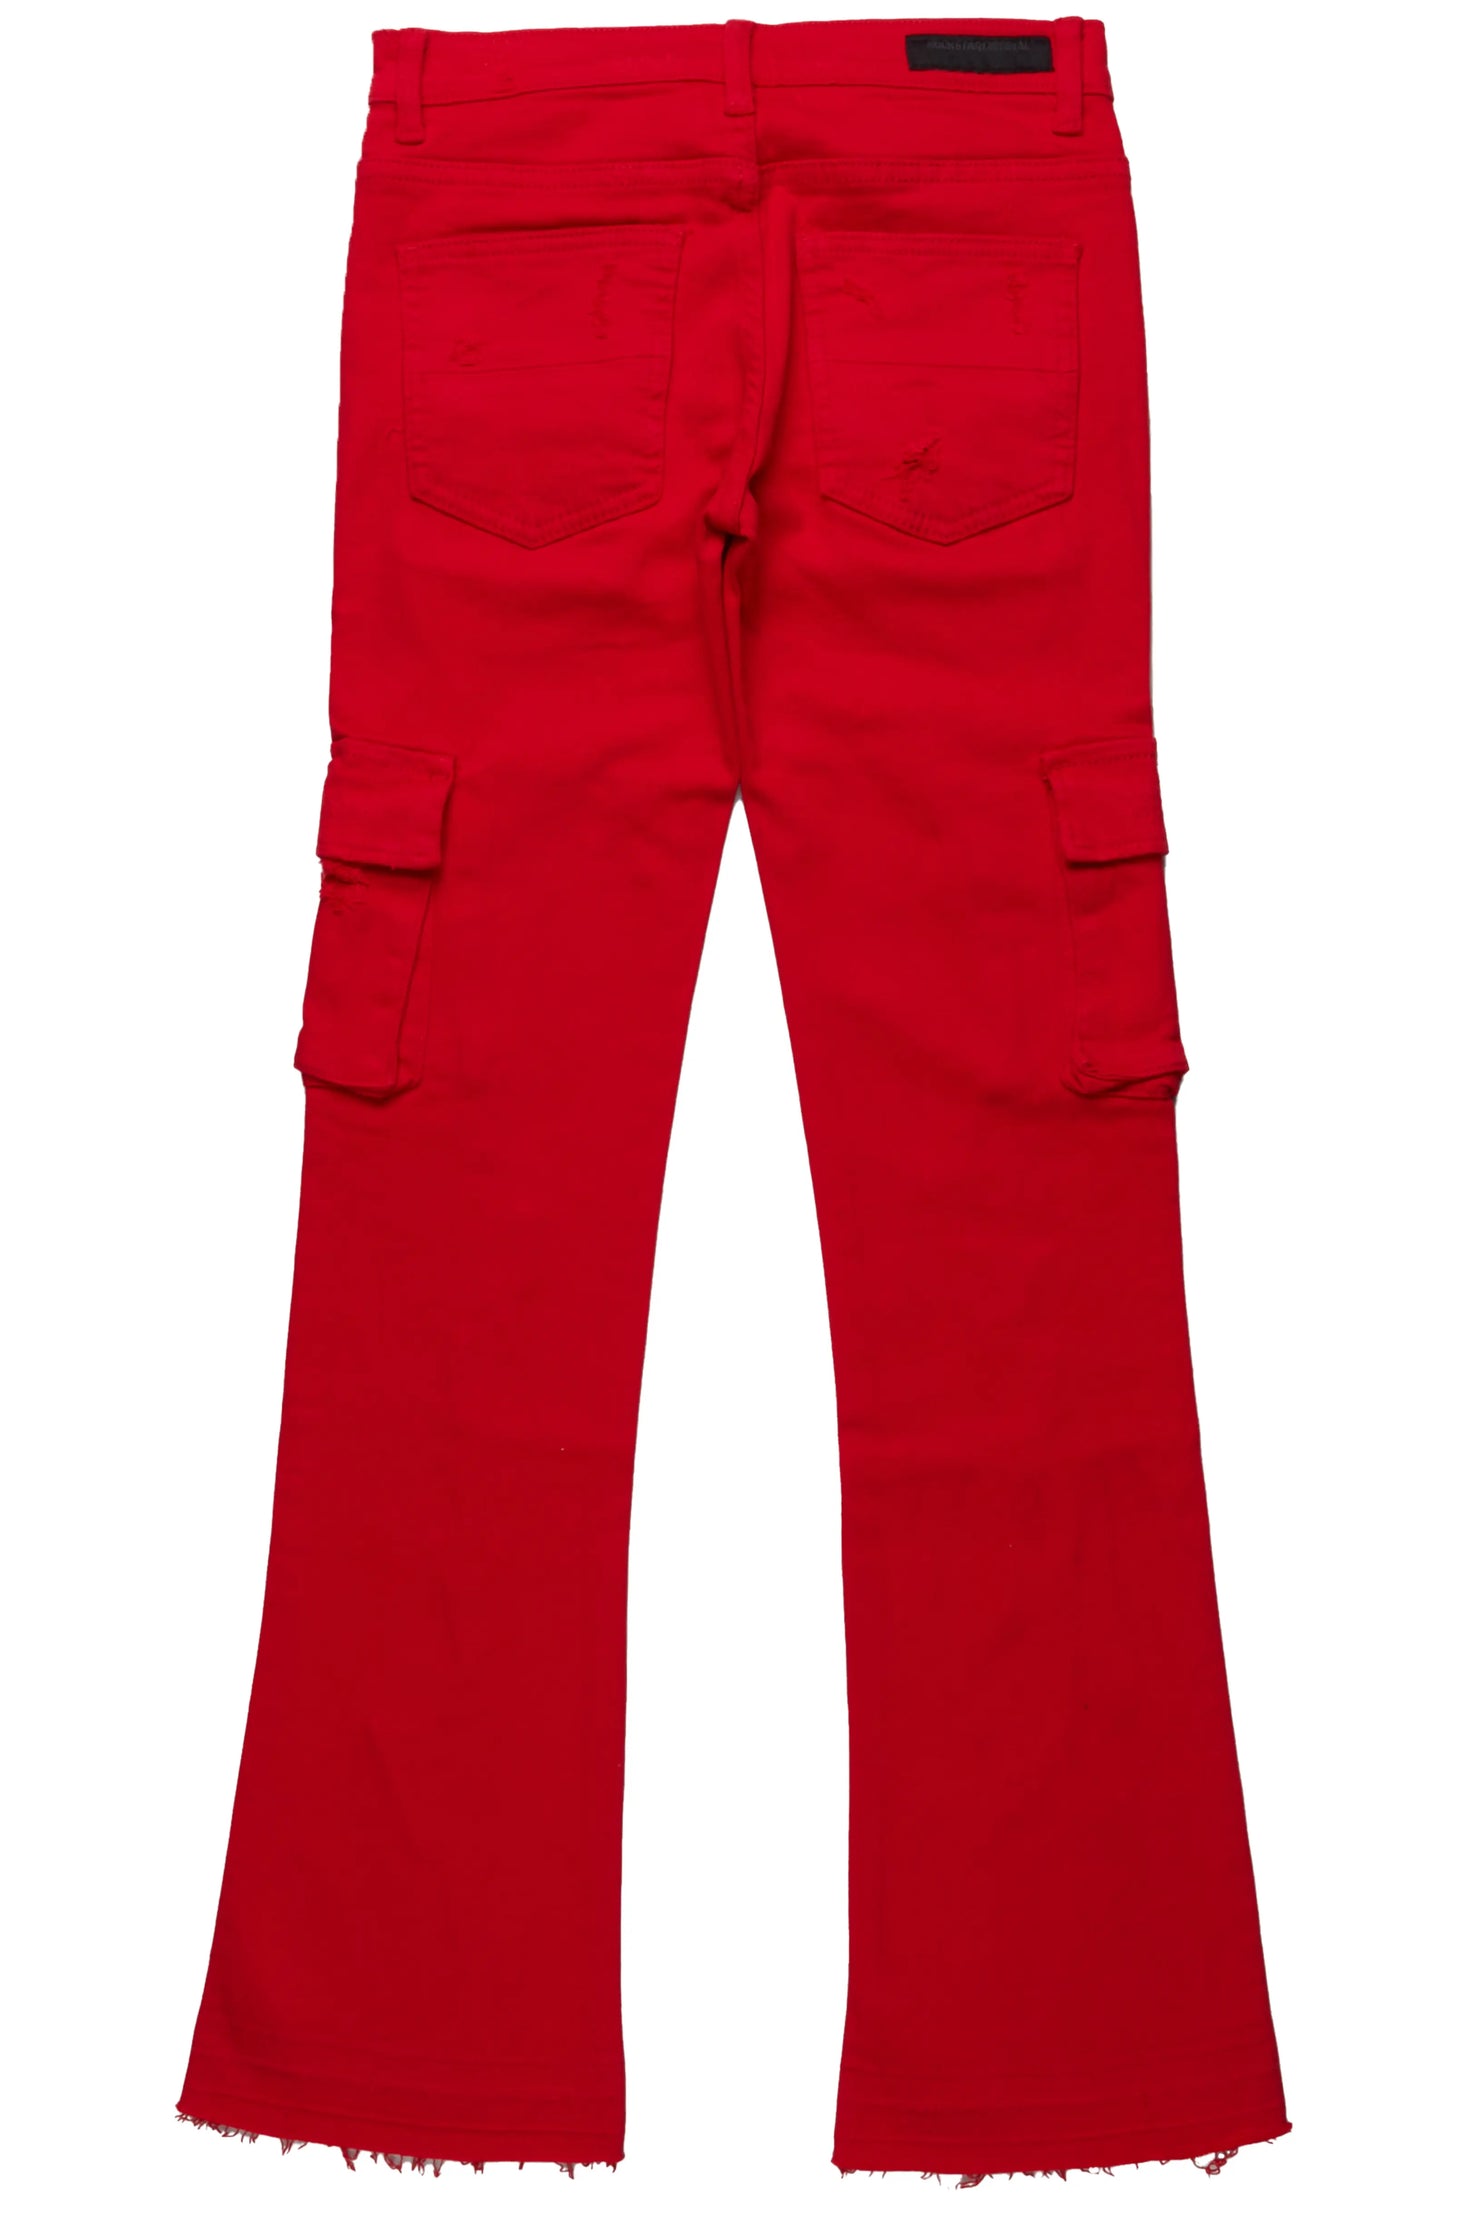 Zaire Red Cargo Super Stacked Flare Jean– Rockstar Original